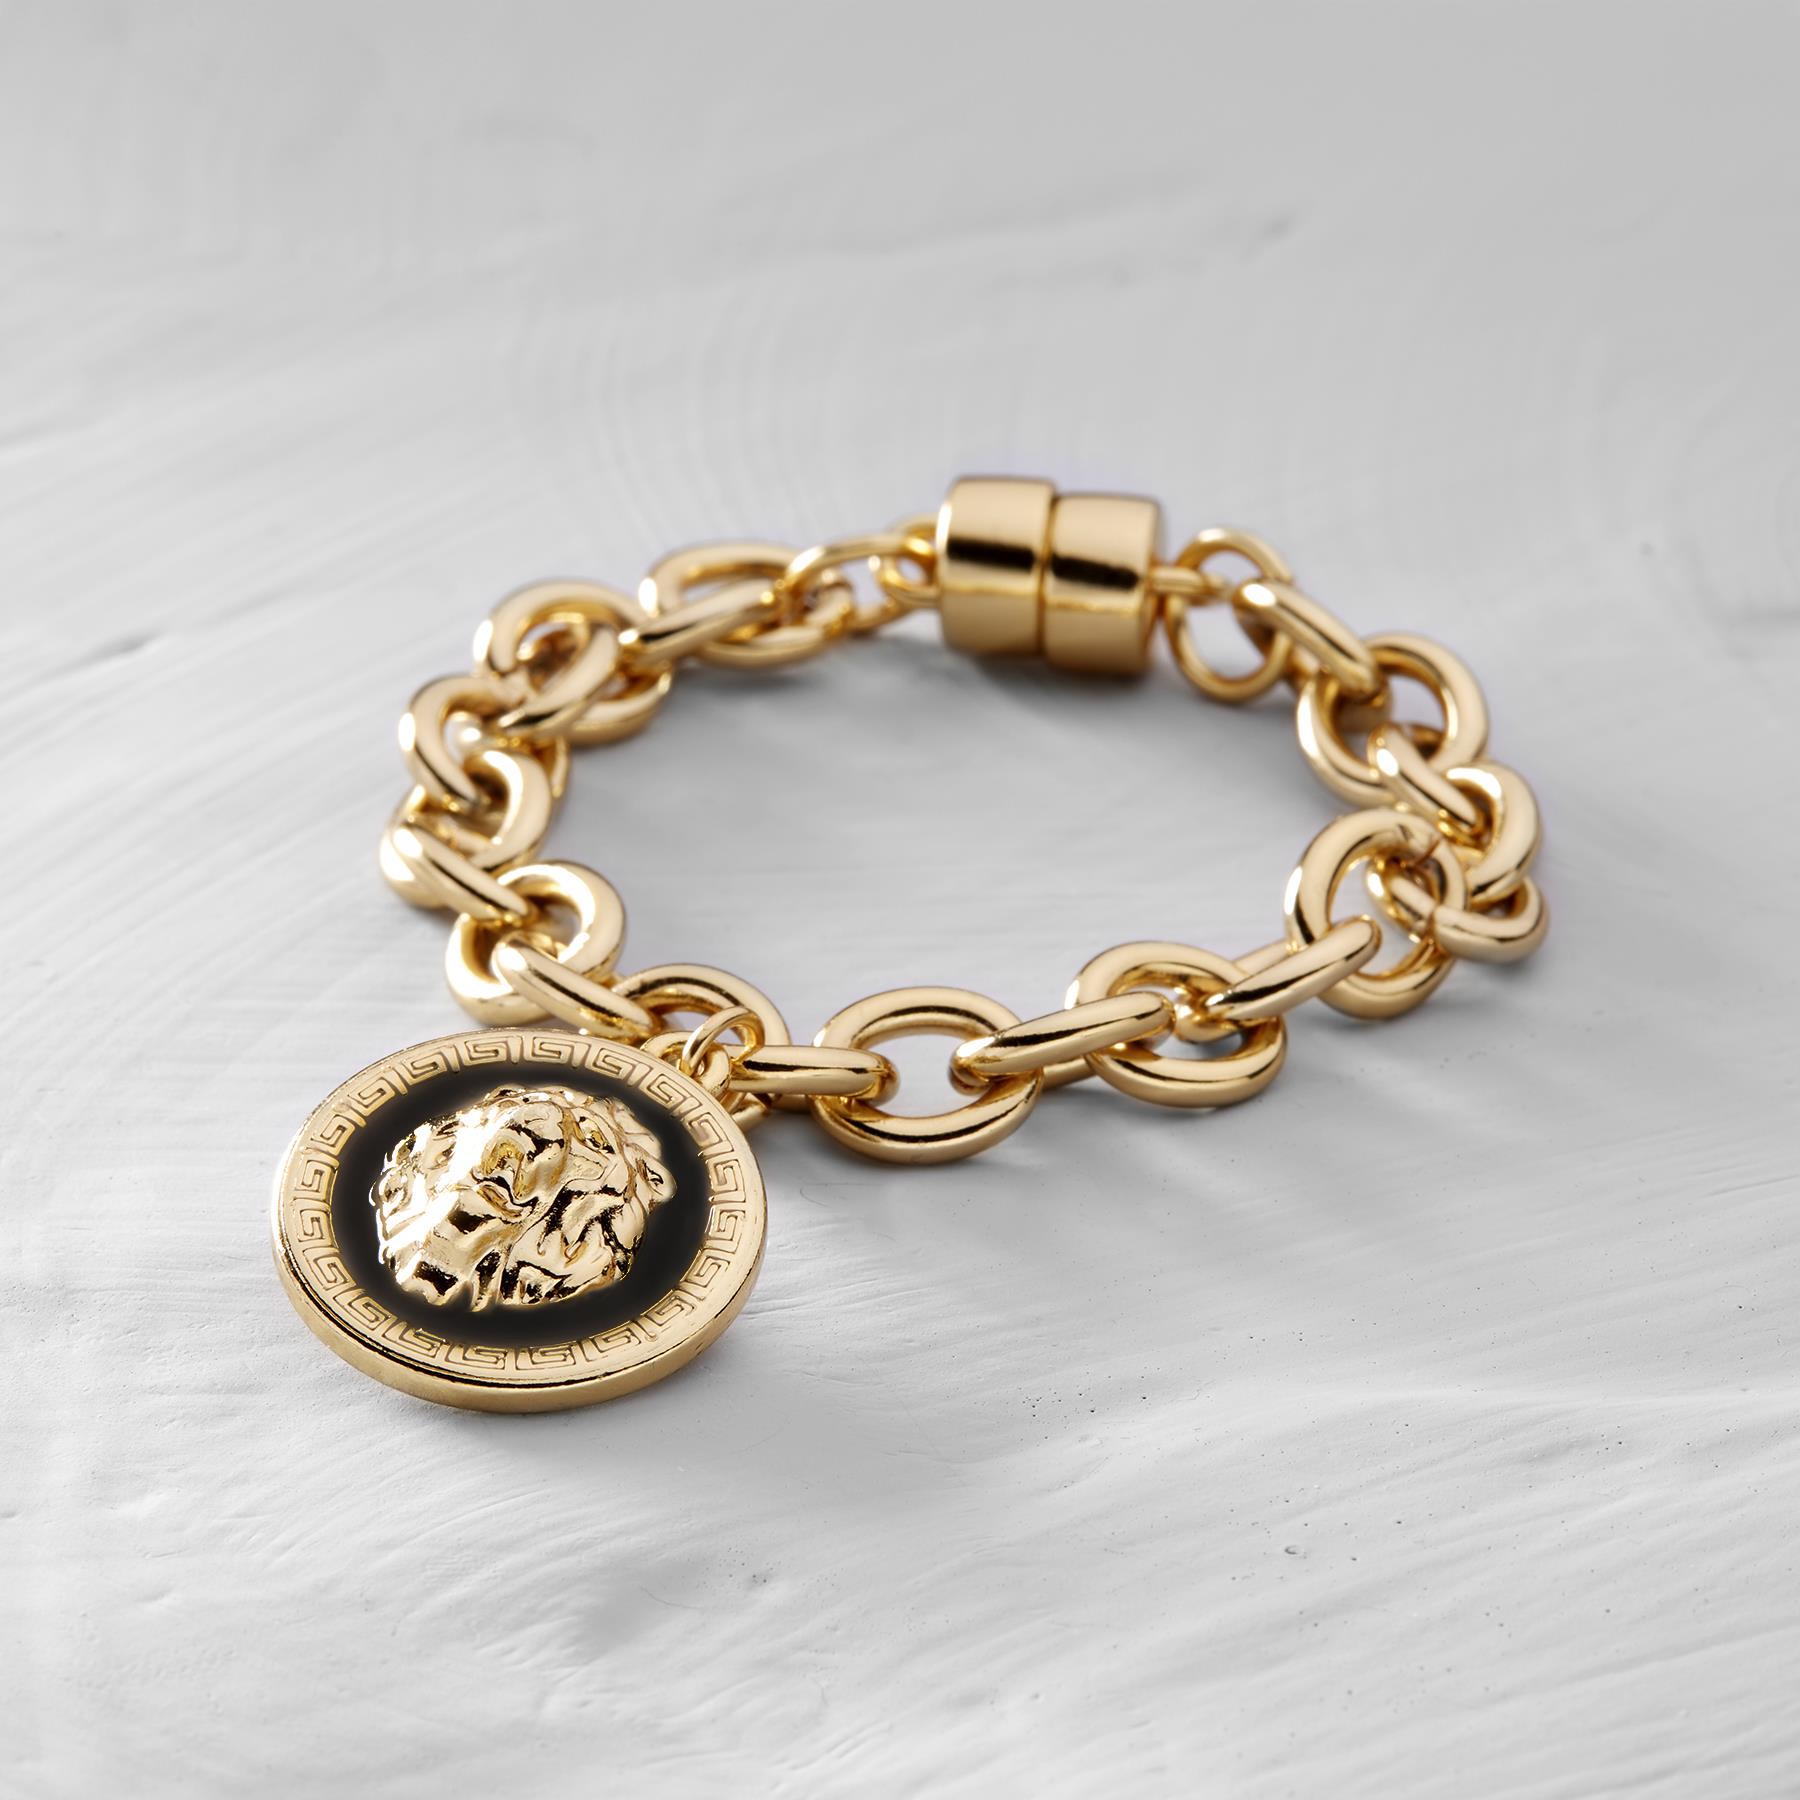 versace bracelet price